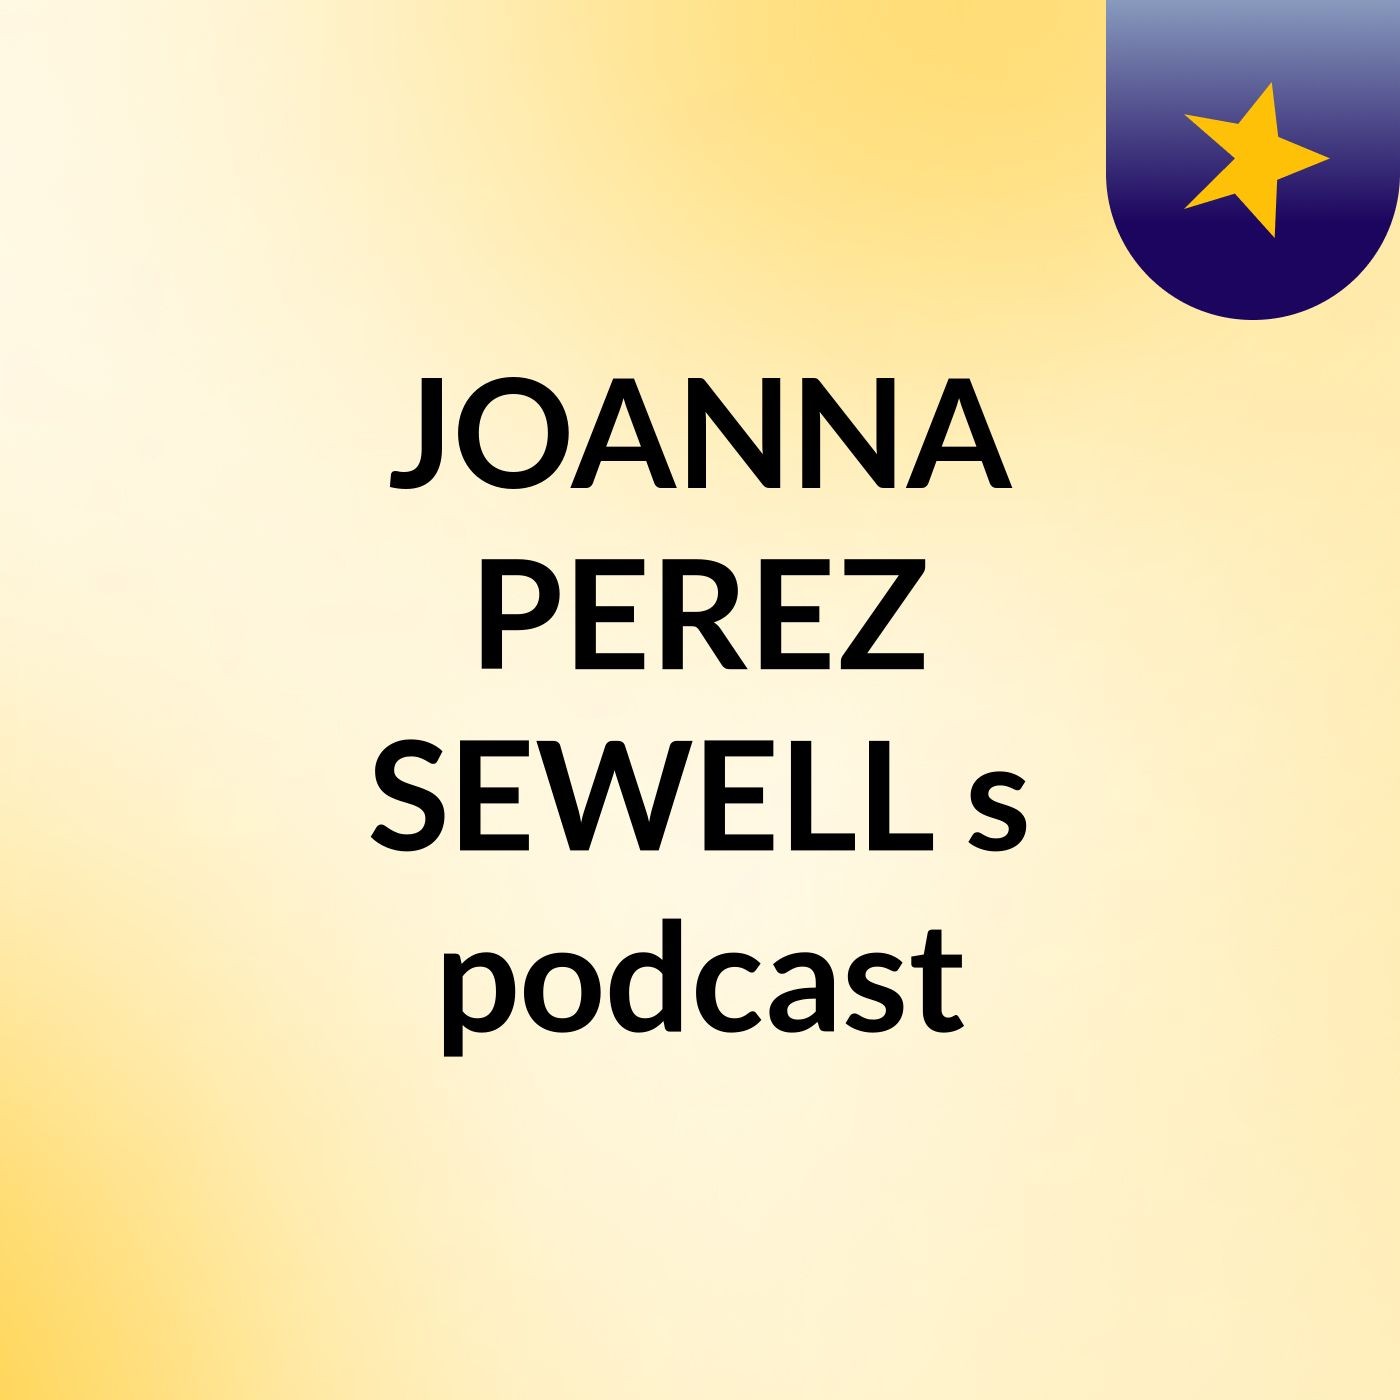 JOANNA PEREZ SEWELL's podcast